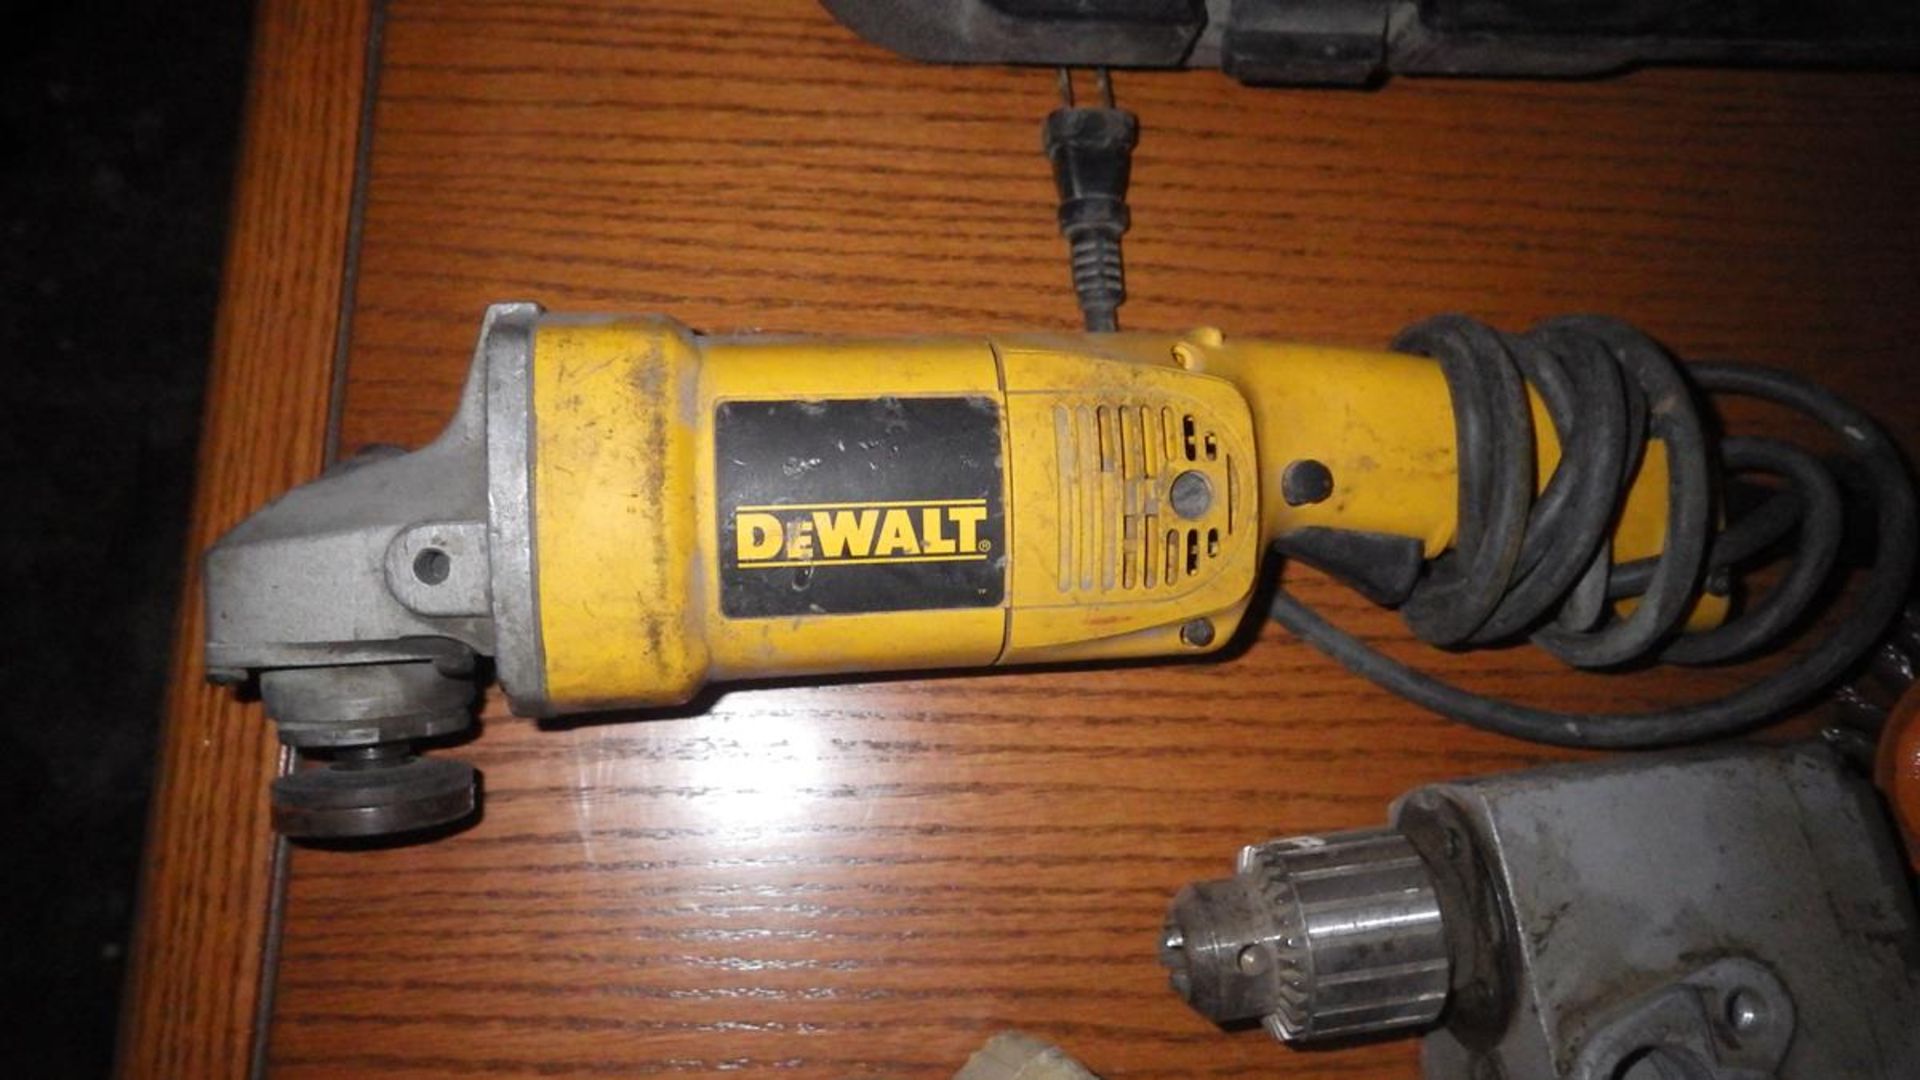 Dewalt angle grinder, Makita angle grinder, Milwaukee drill, and B&D sander - Image 3 of 5